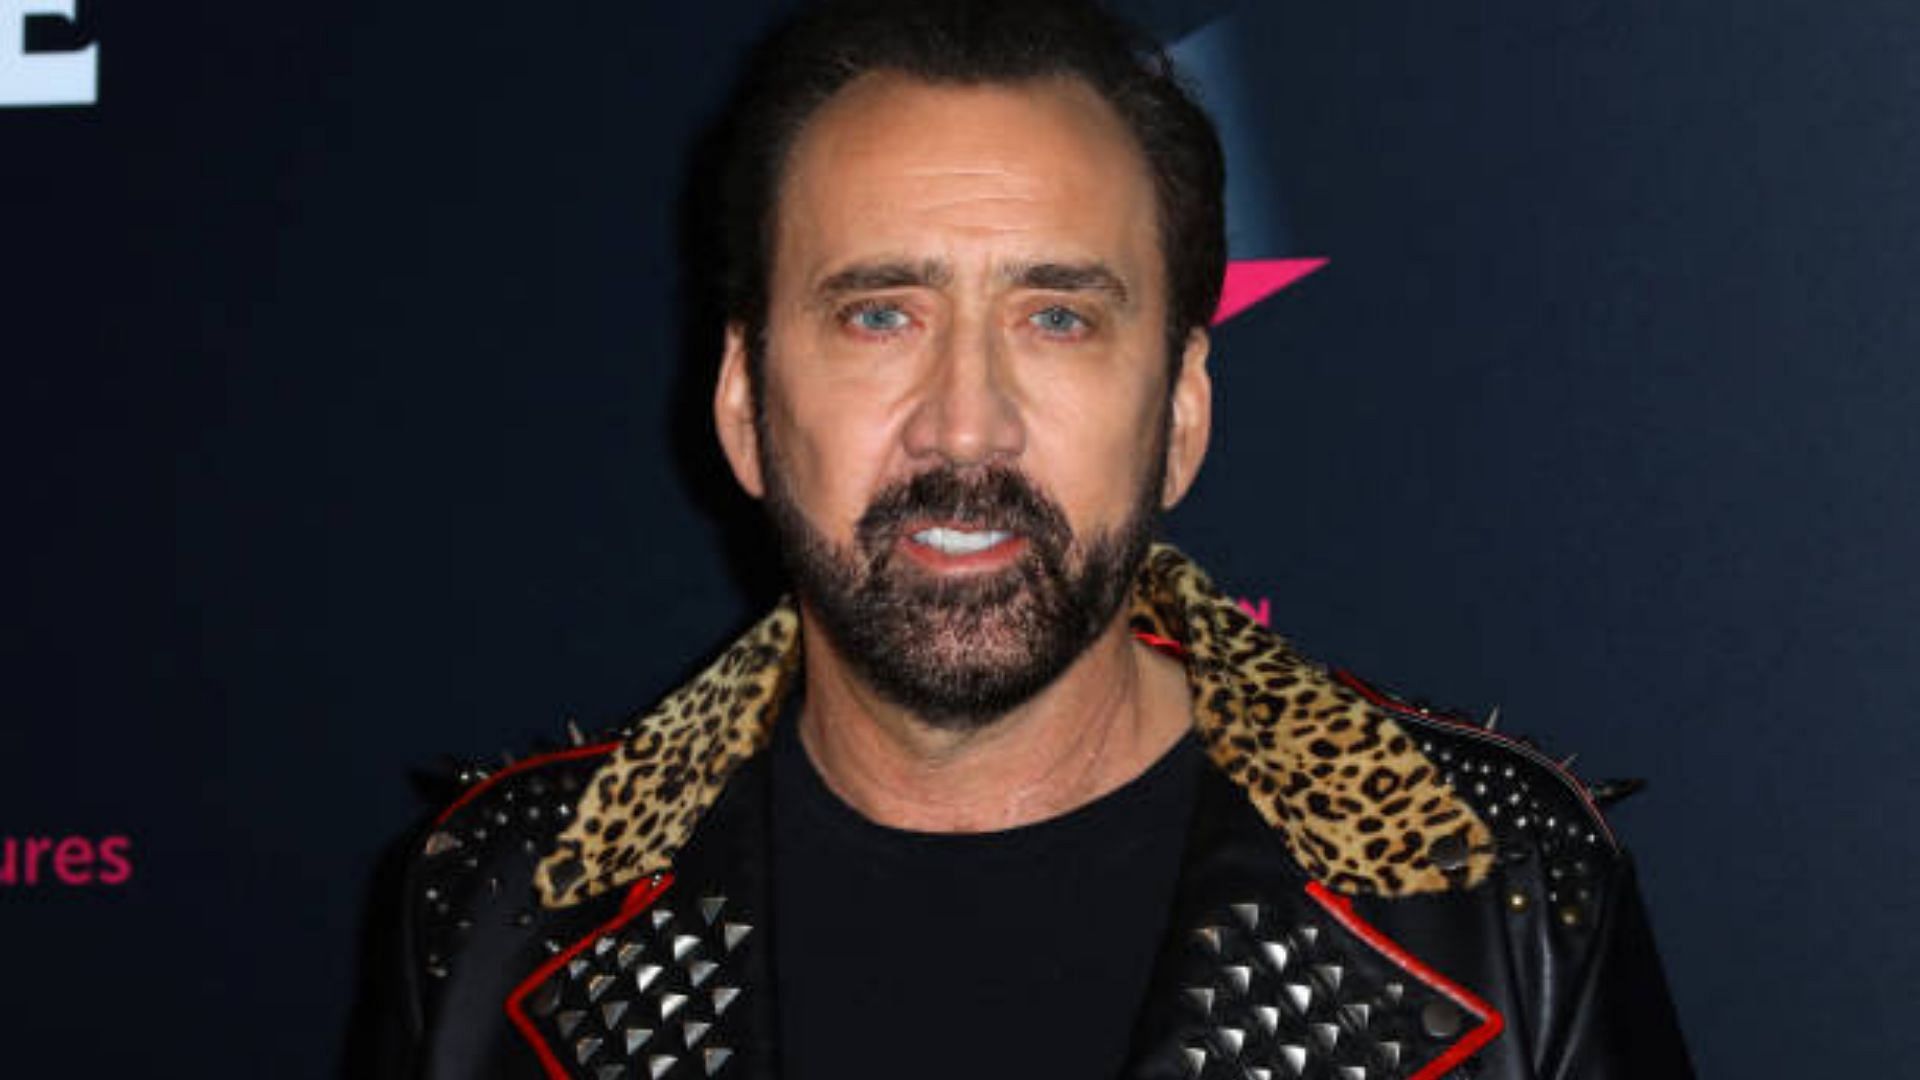 Nicolas Cage, a sensational Hollywood star (Image via Getty Images)